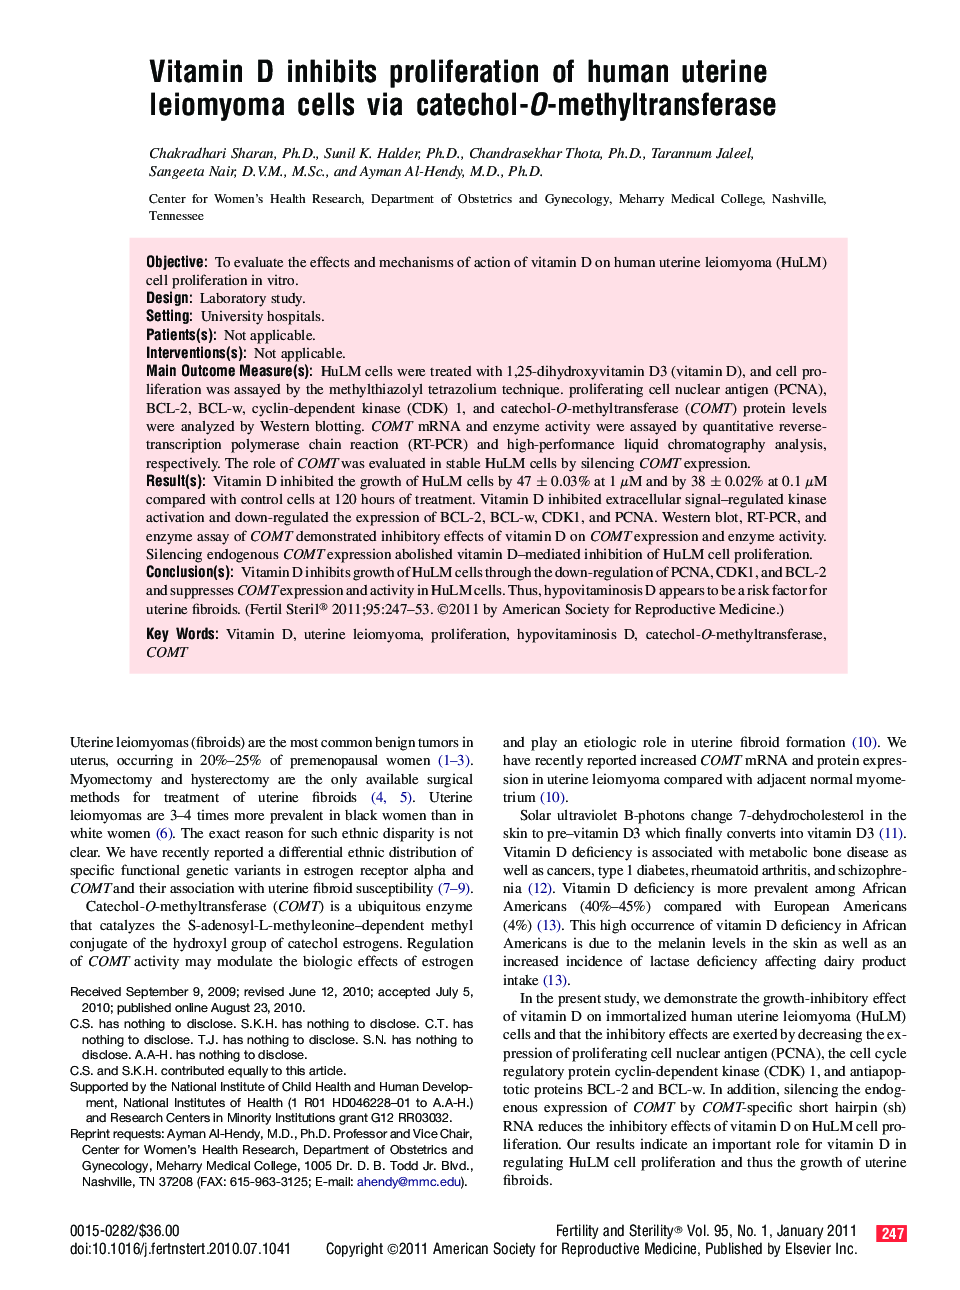 Vitamin D inhibits proliferation of human uterine leiomyoma cells via catechol-O-methyltransferase 